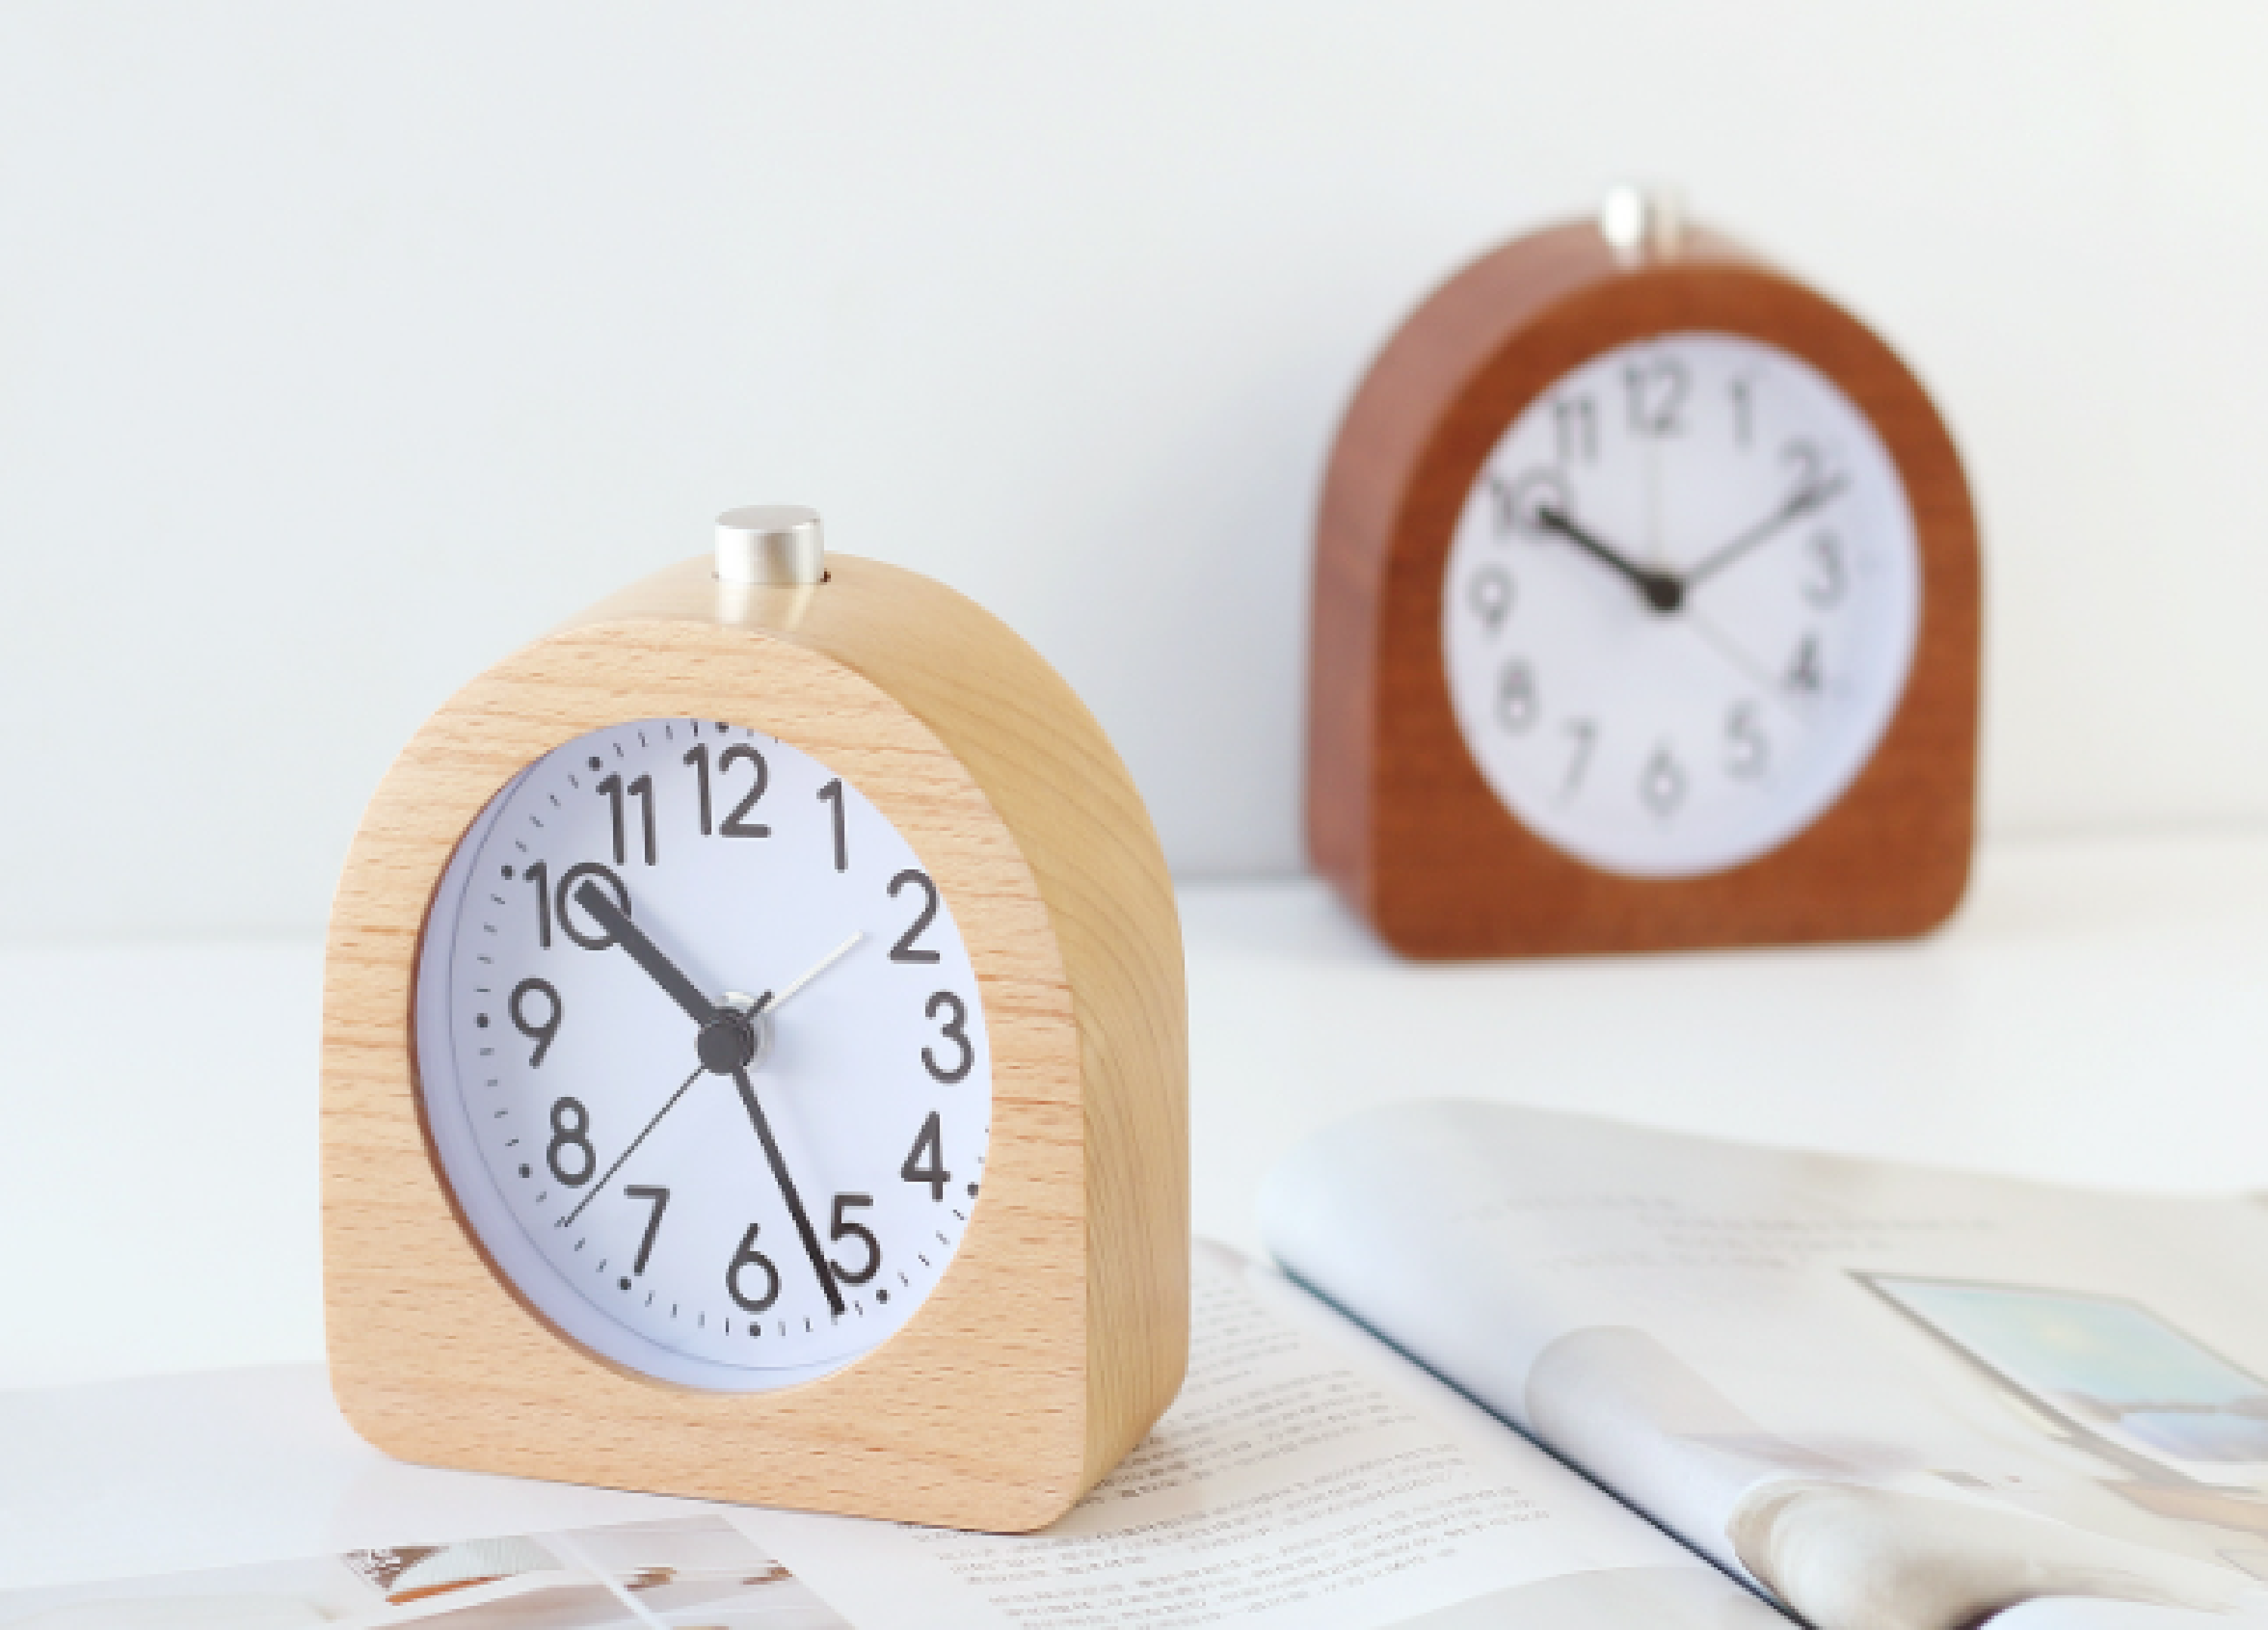 Arc-shaped solid wood clock, student sleepiness, lazy alarm clock